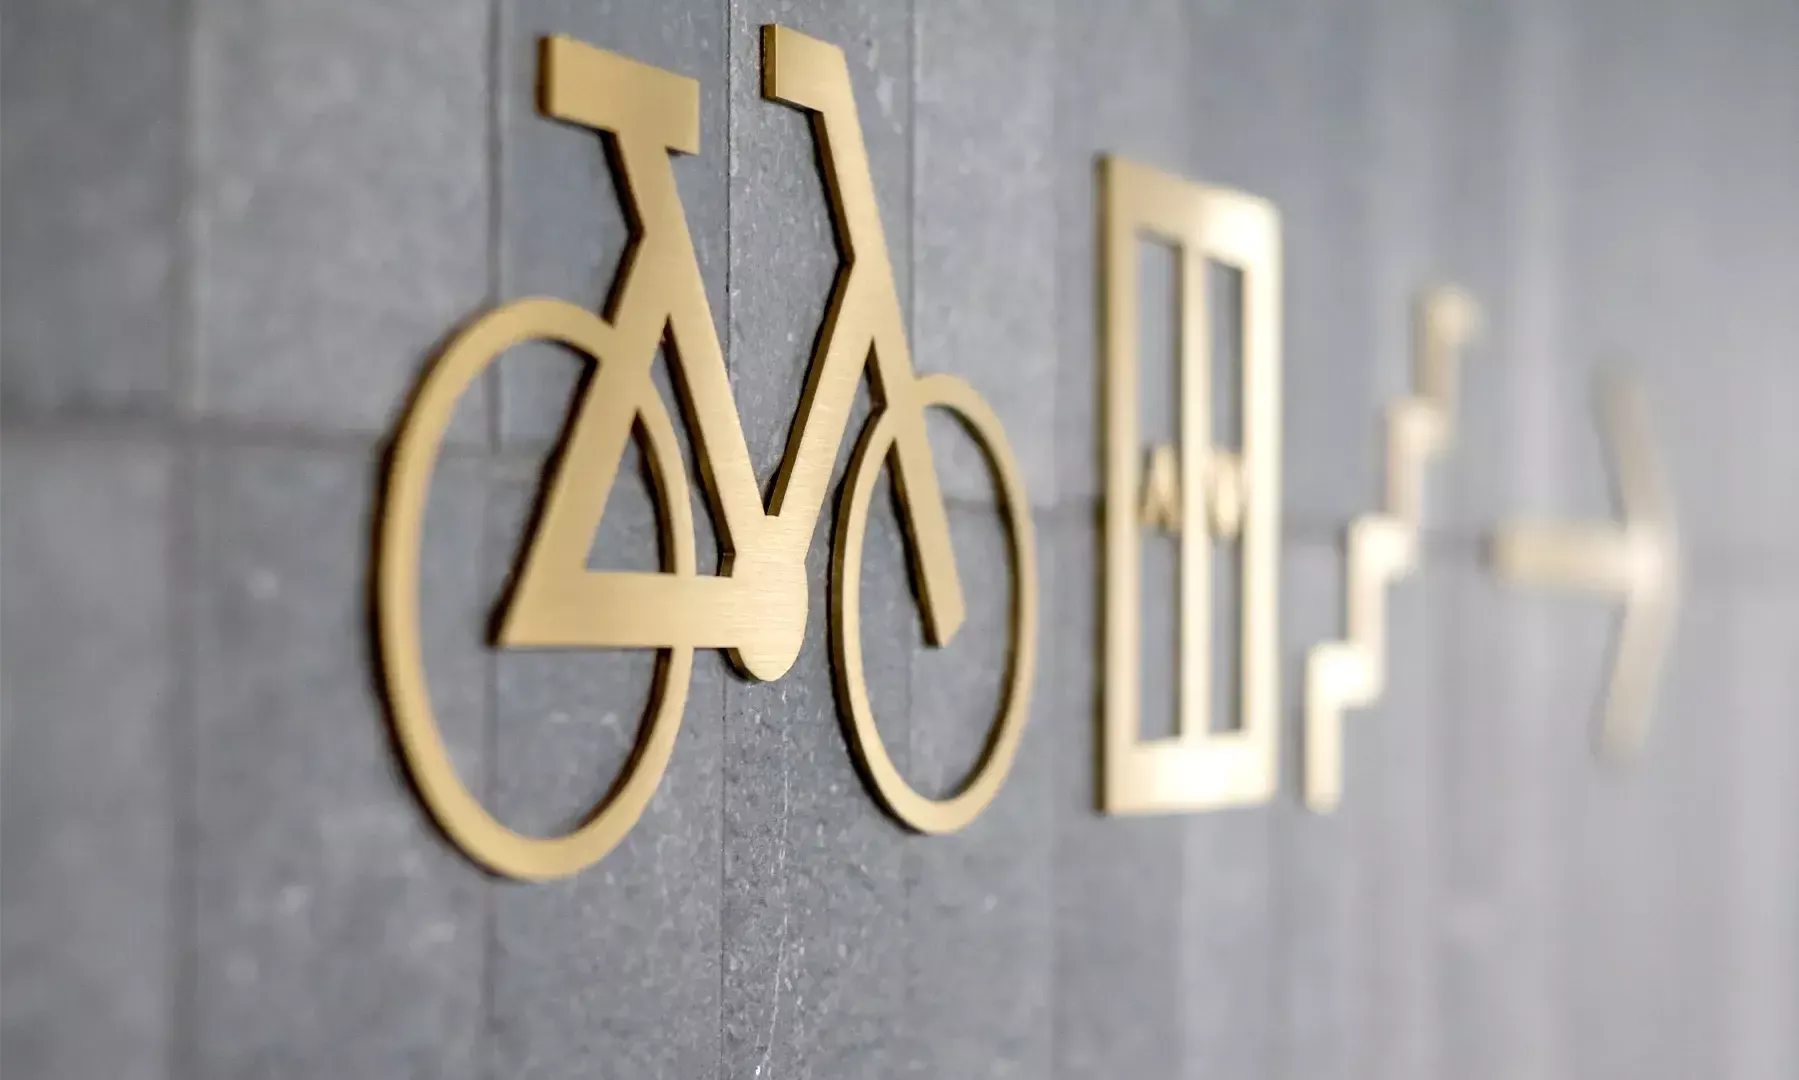 Piktogramm Fahrradschild - Piktogramm Fahrradschild aus Metall